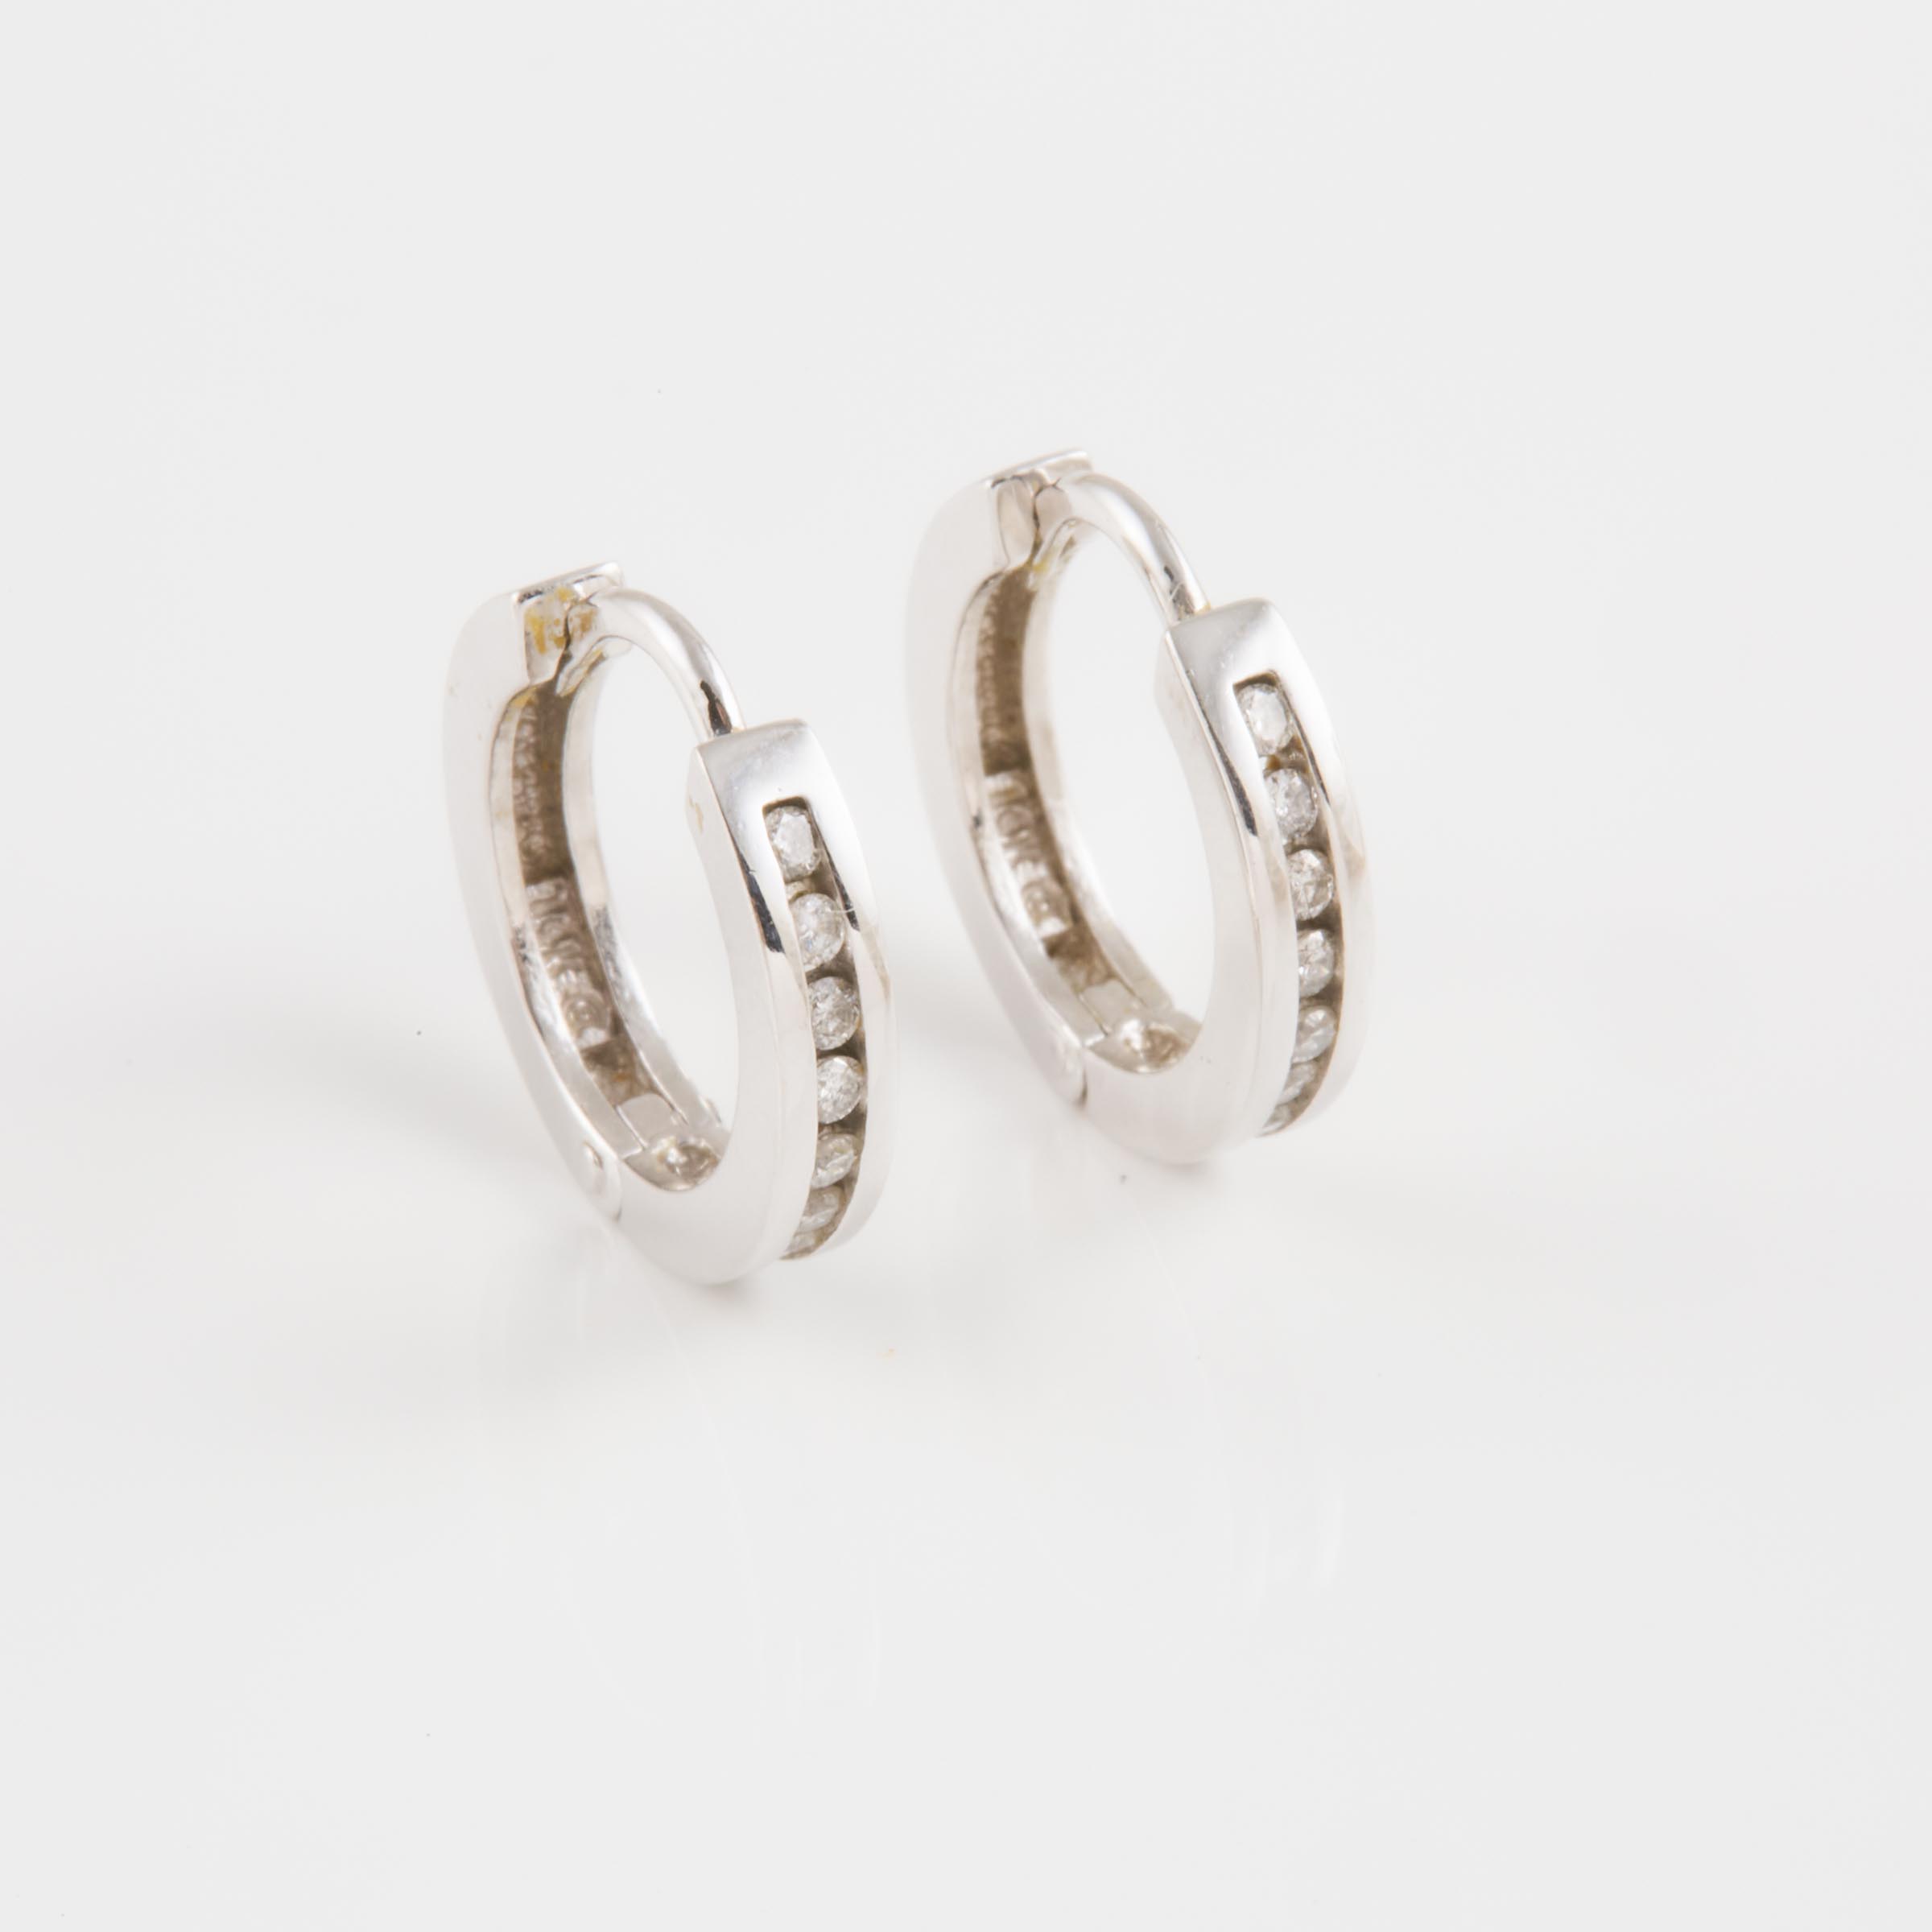 Pair Of 14k White Gold 'Huggie" Earrings